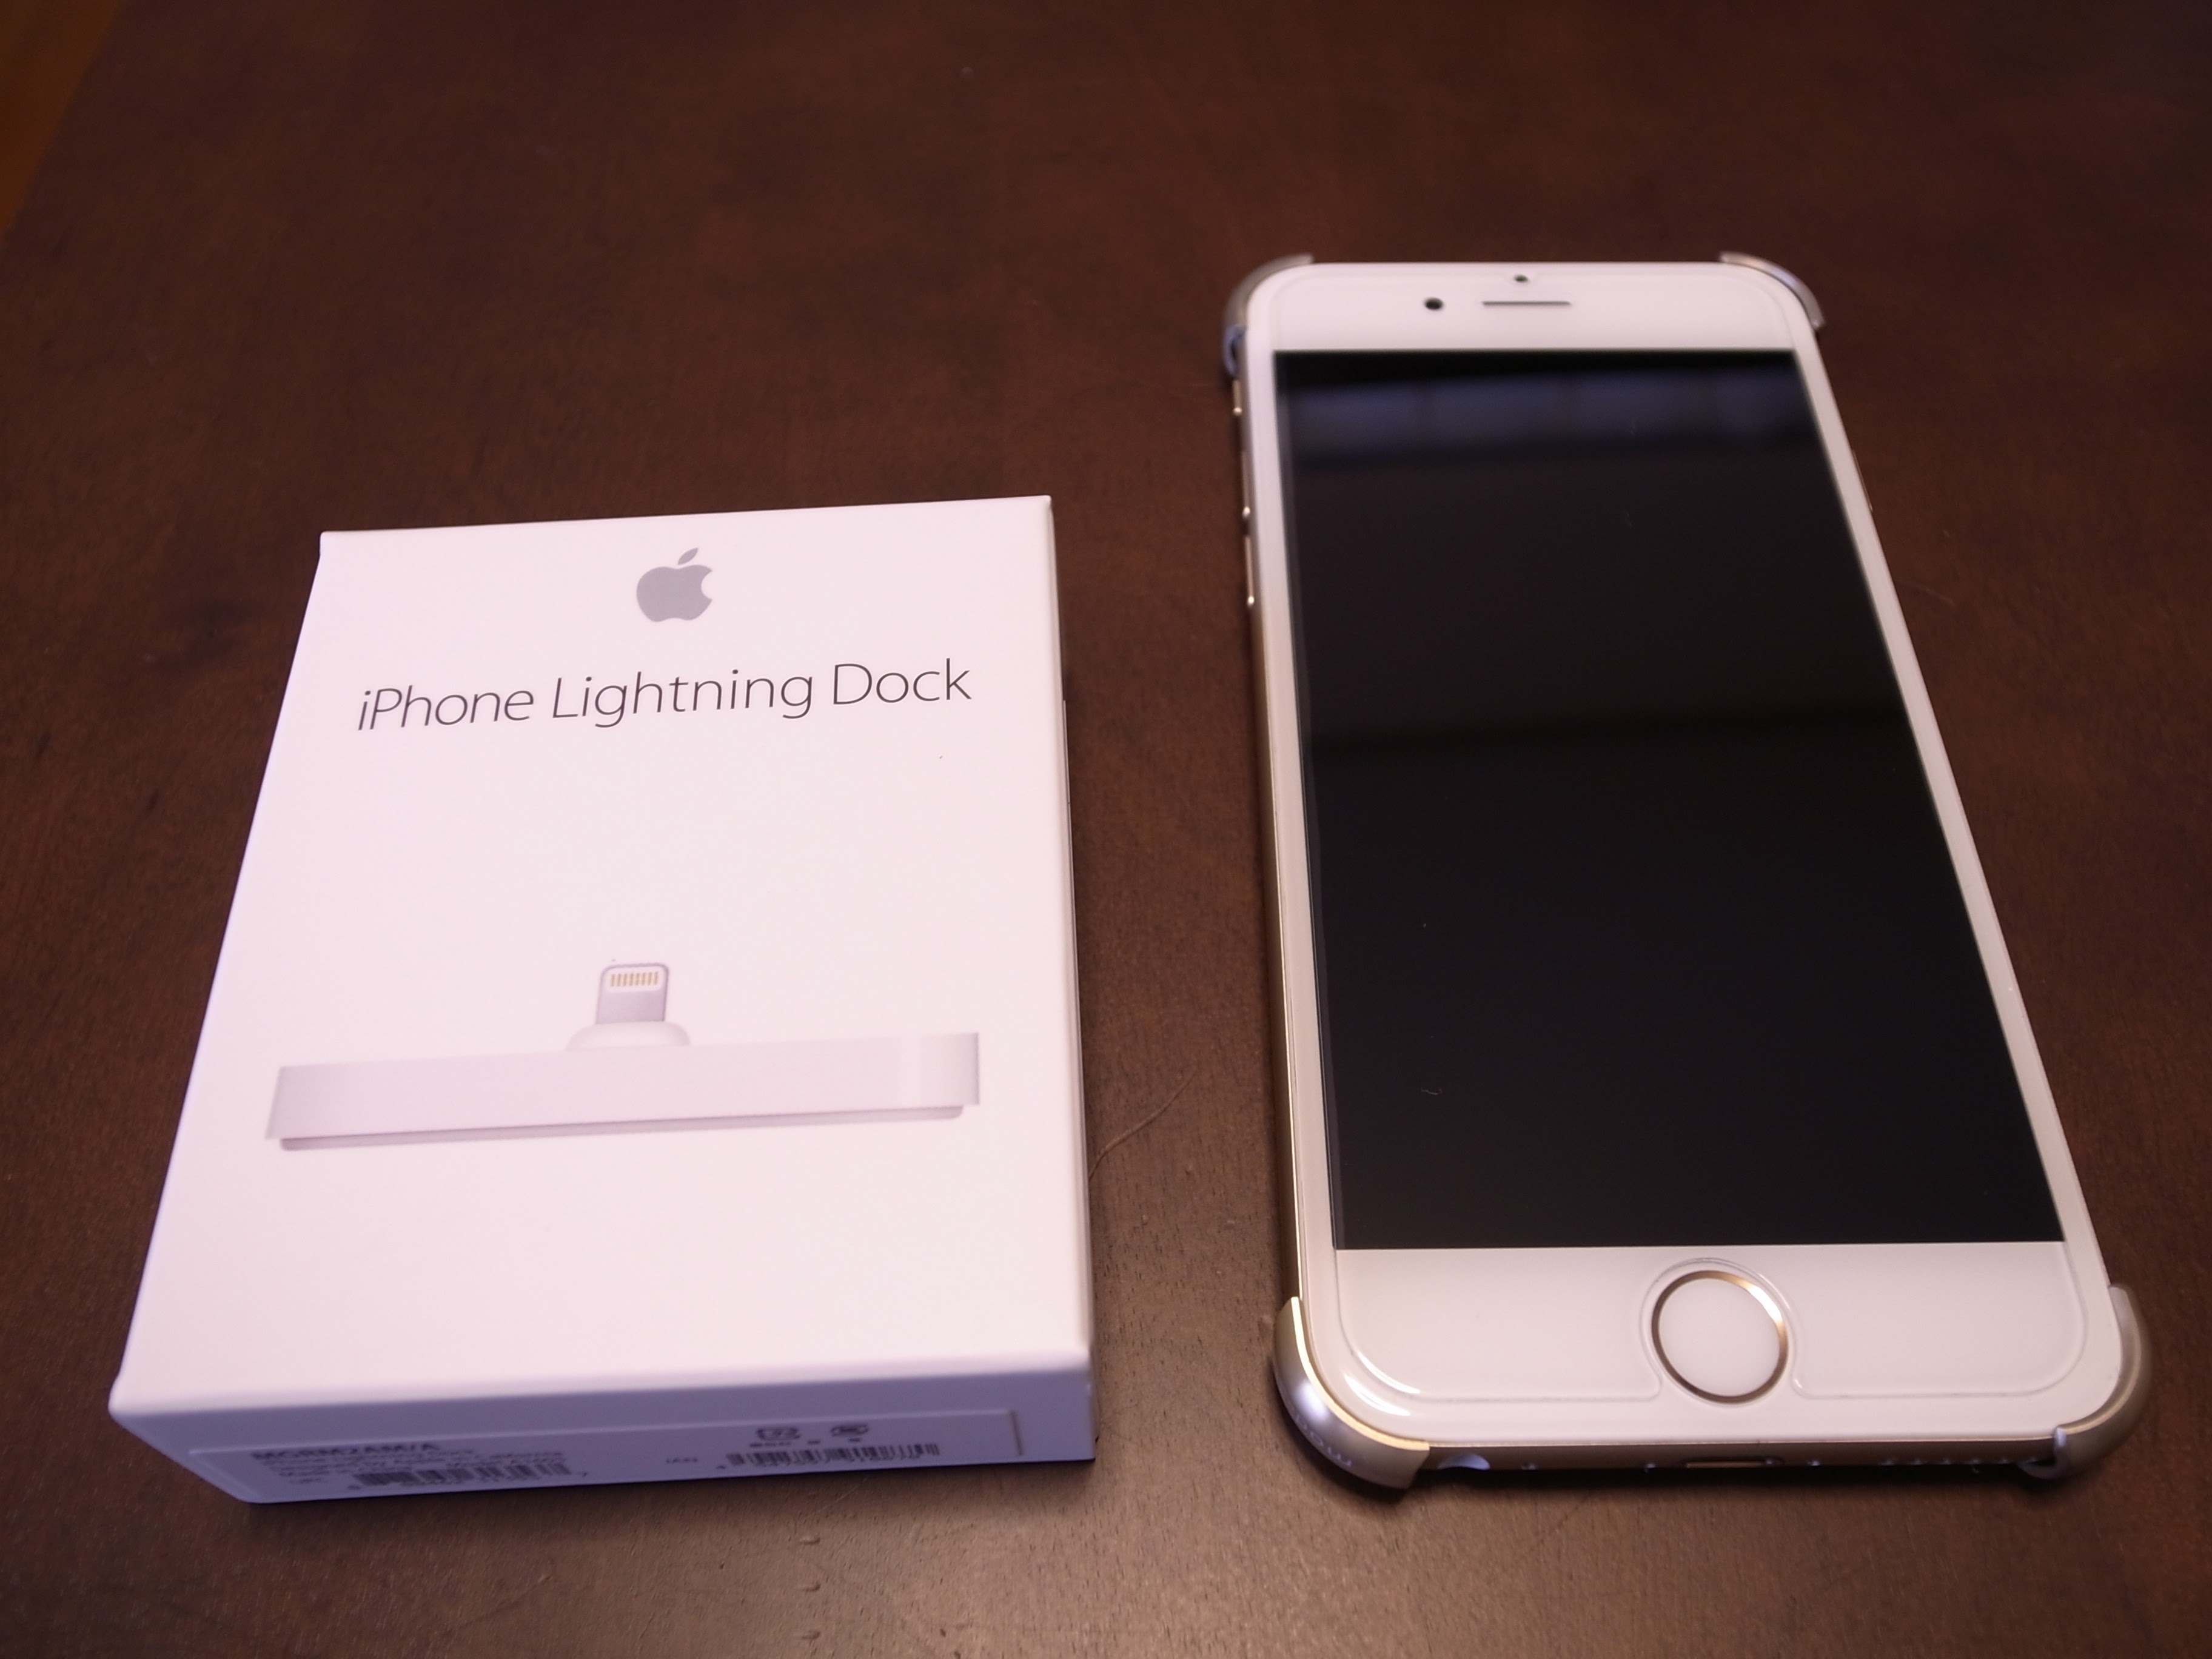 0818-201506_iPhone Lightning Dock 02